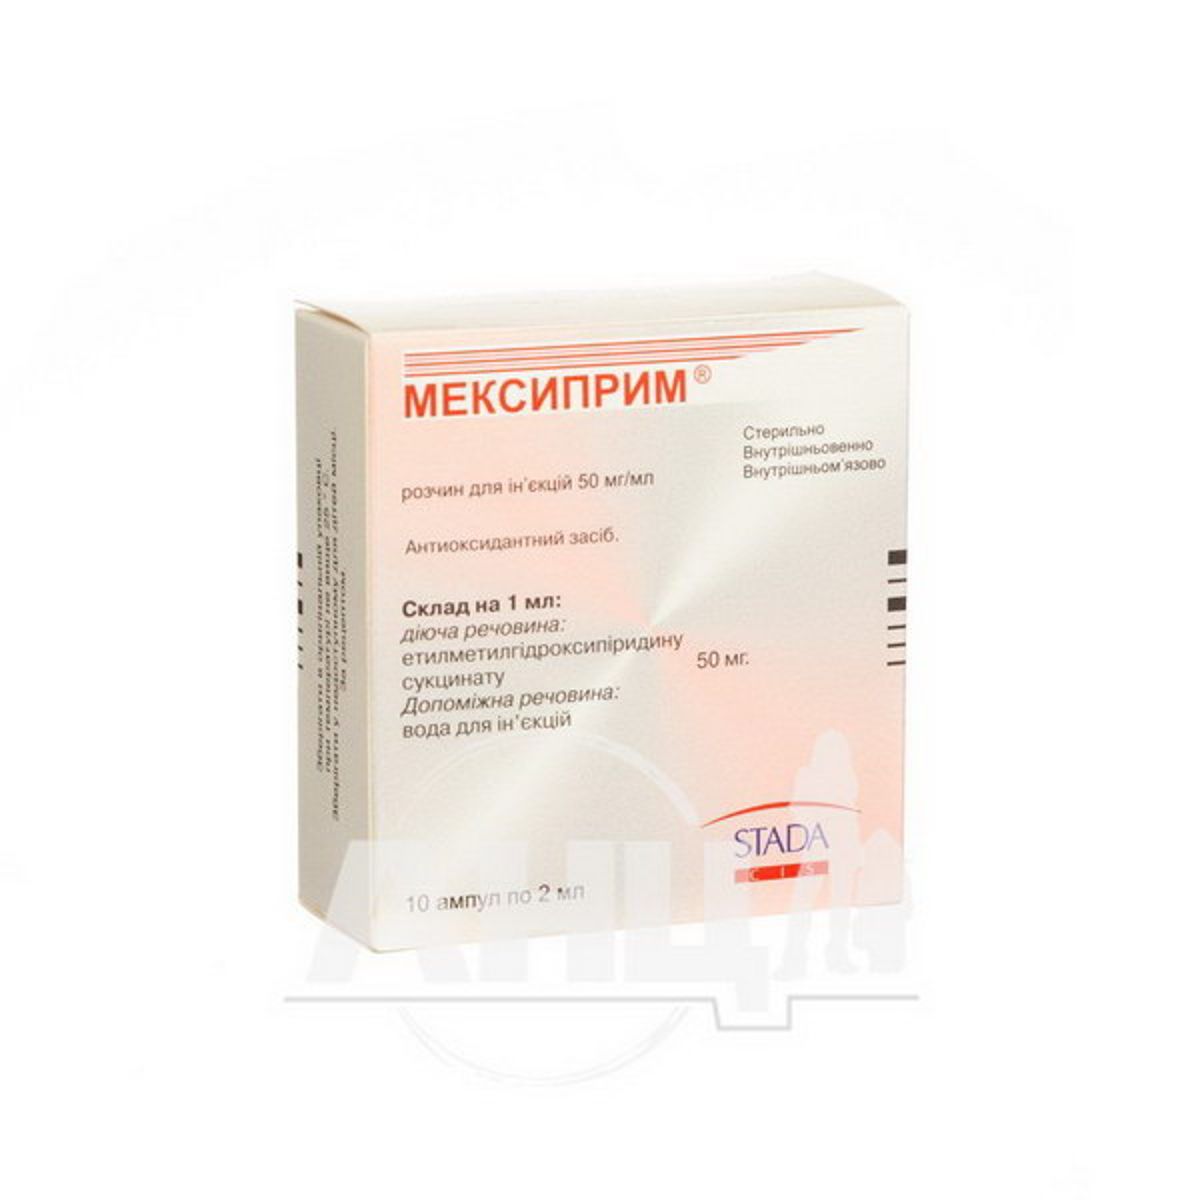 Mexiprim 2мл - 10 ампул. Мексиприм в ампулах 2 мл. Мексиприм раствор для инъекций аналоги. Mexiprimi уколы 2,0. Армадин лонг инструкция цена отзывы врачей